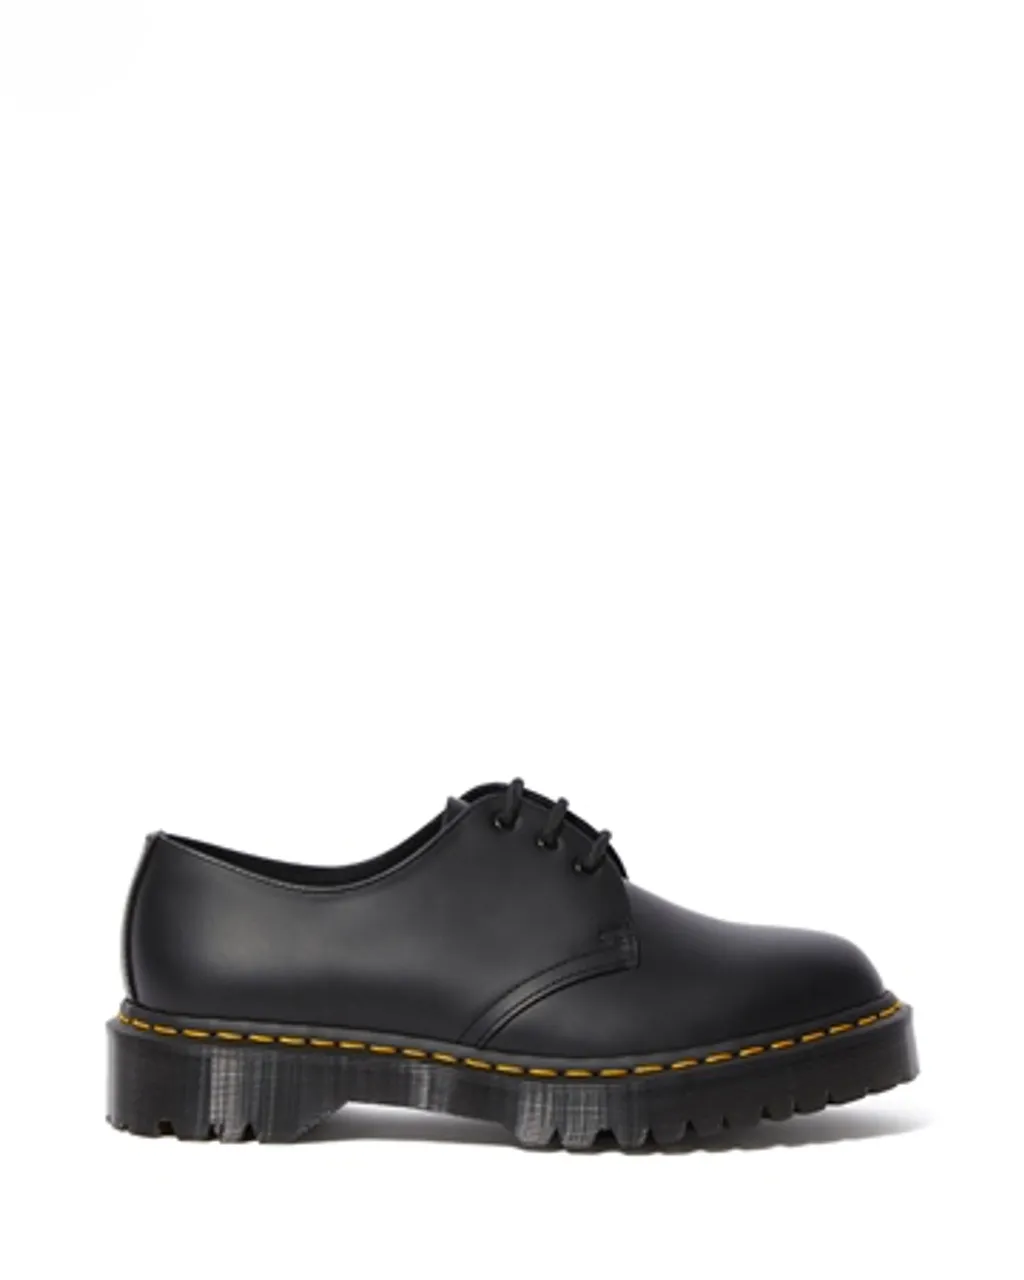 Dr Martens 1461 Bex Smooth Leather Shoes - Black Smooth - UK 5 (EU 38)